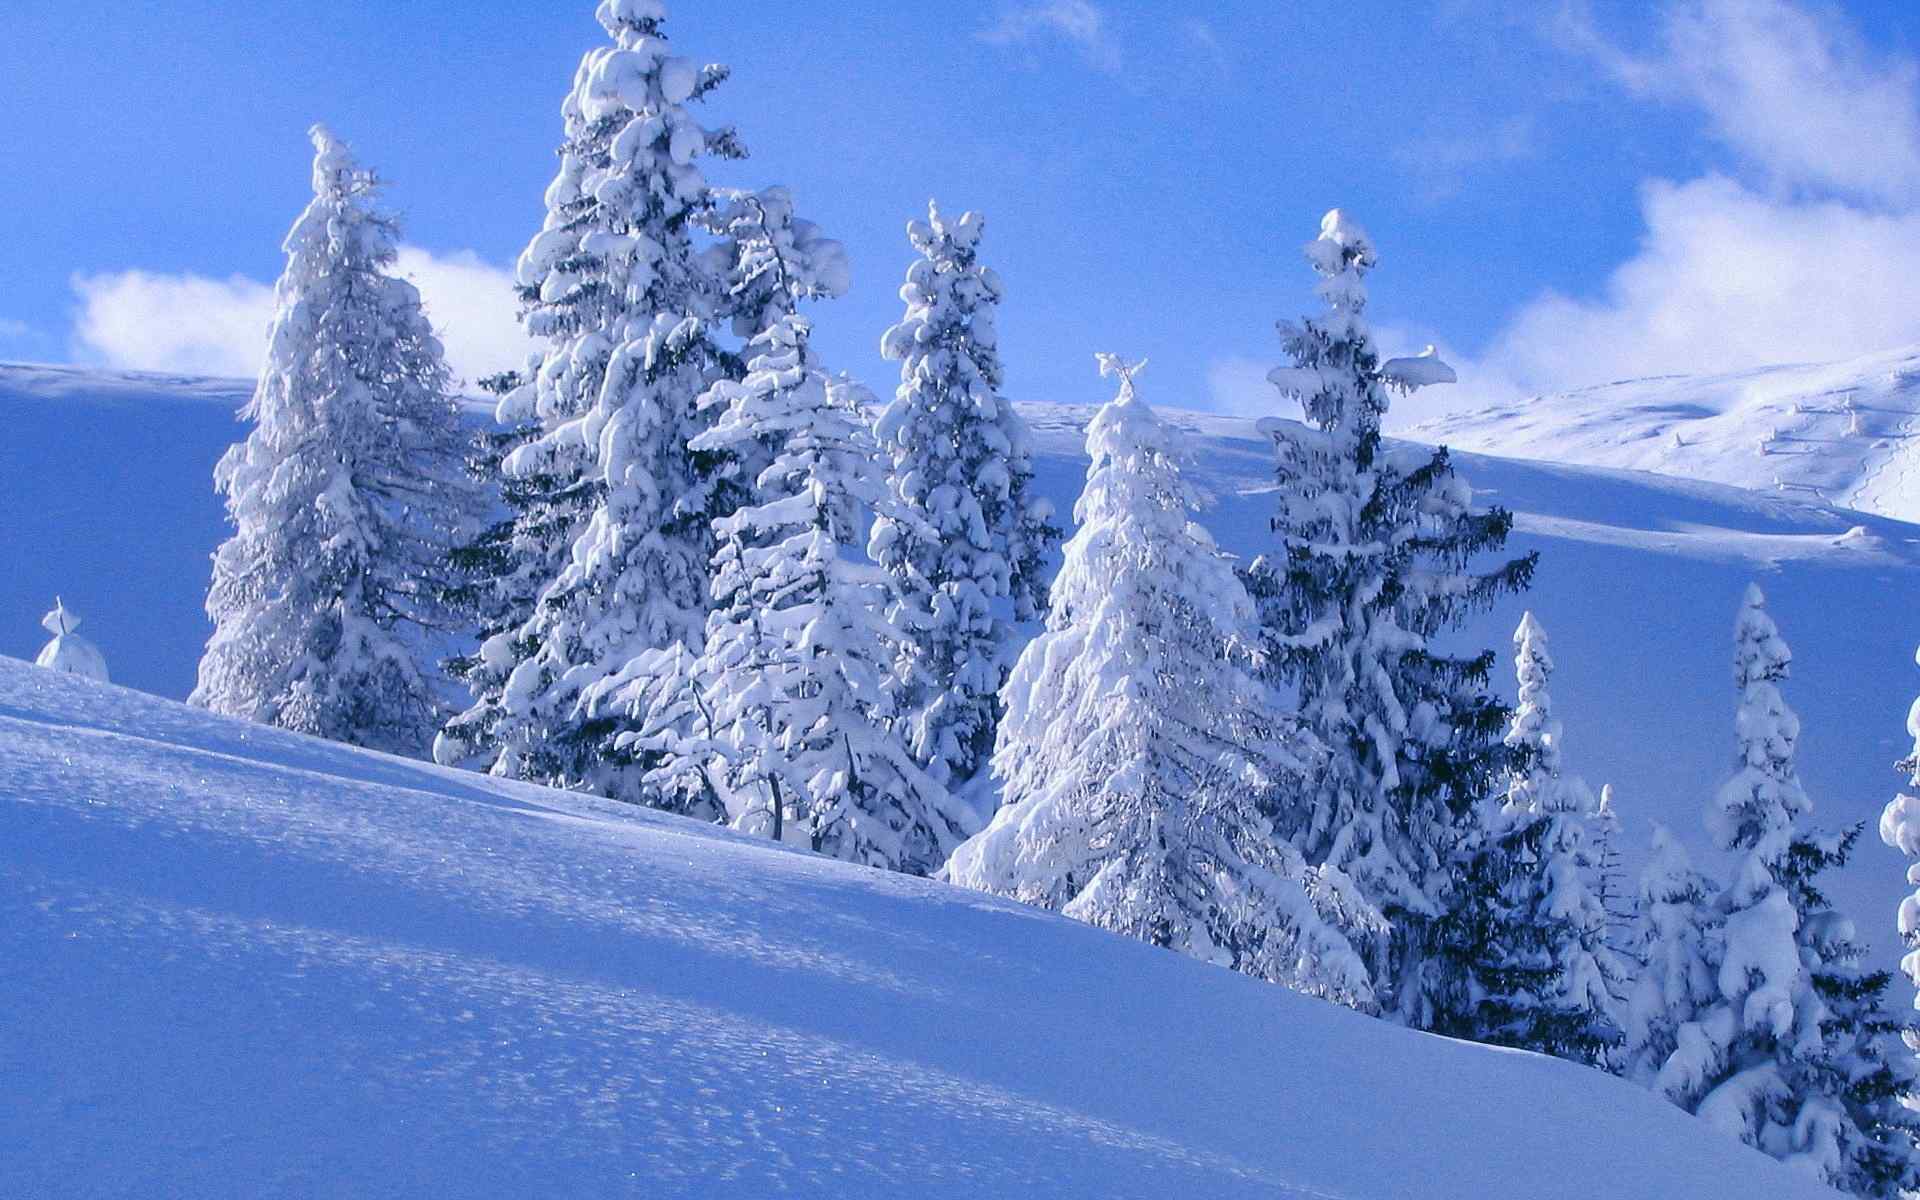 Картинка зимний период. Зимний пейзаж. Красивая зима. Зимняя природа. Сказочный зимний лес.